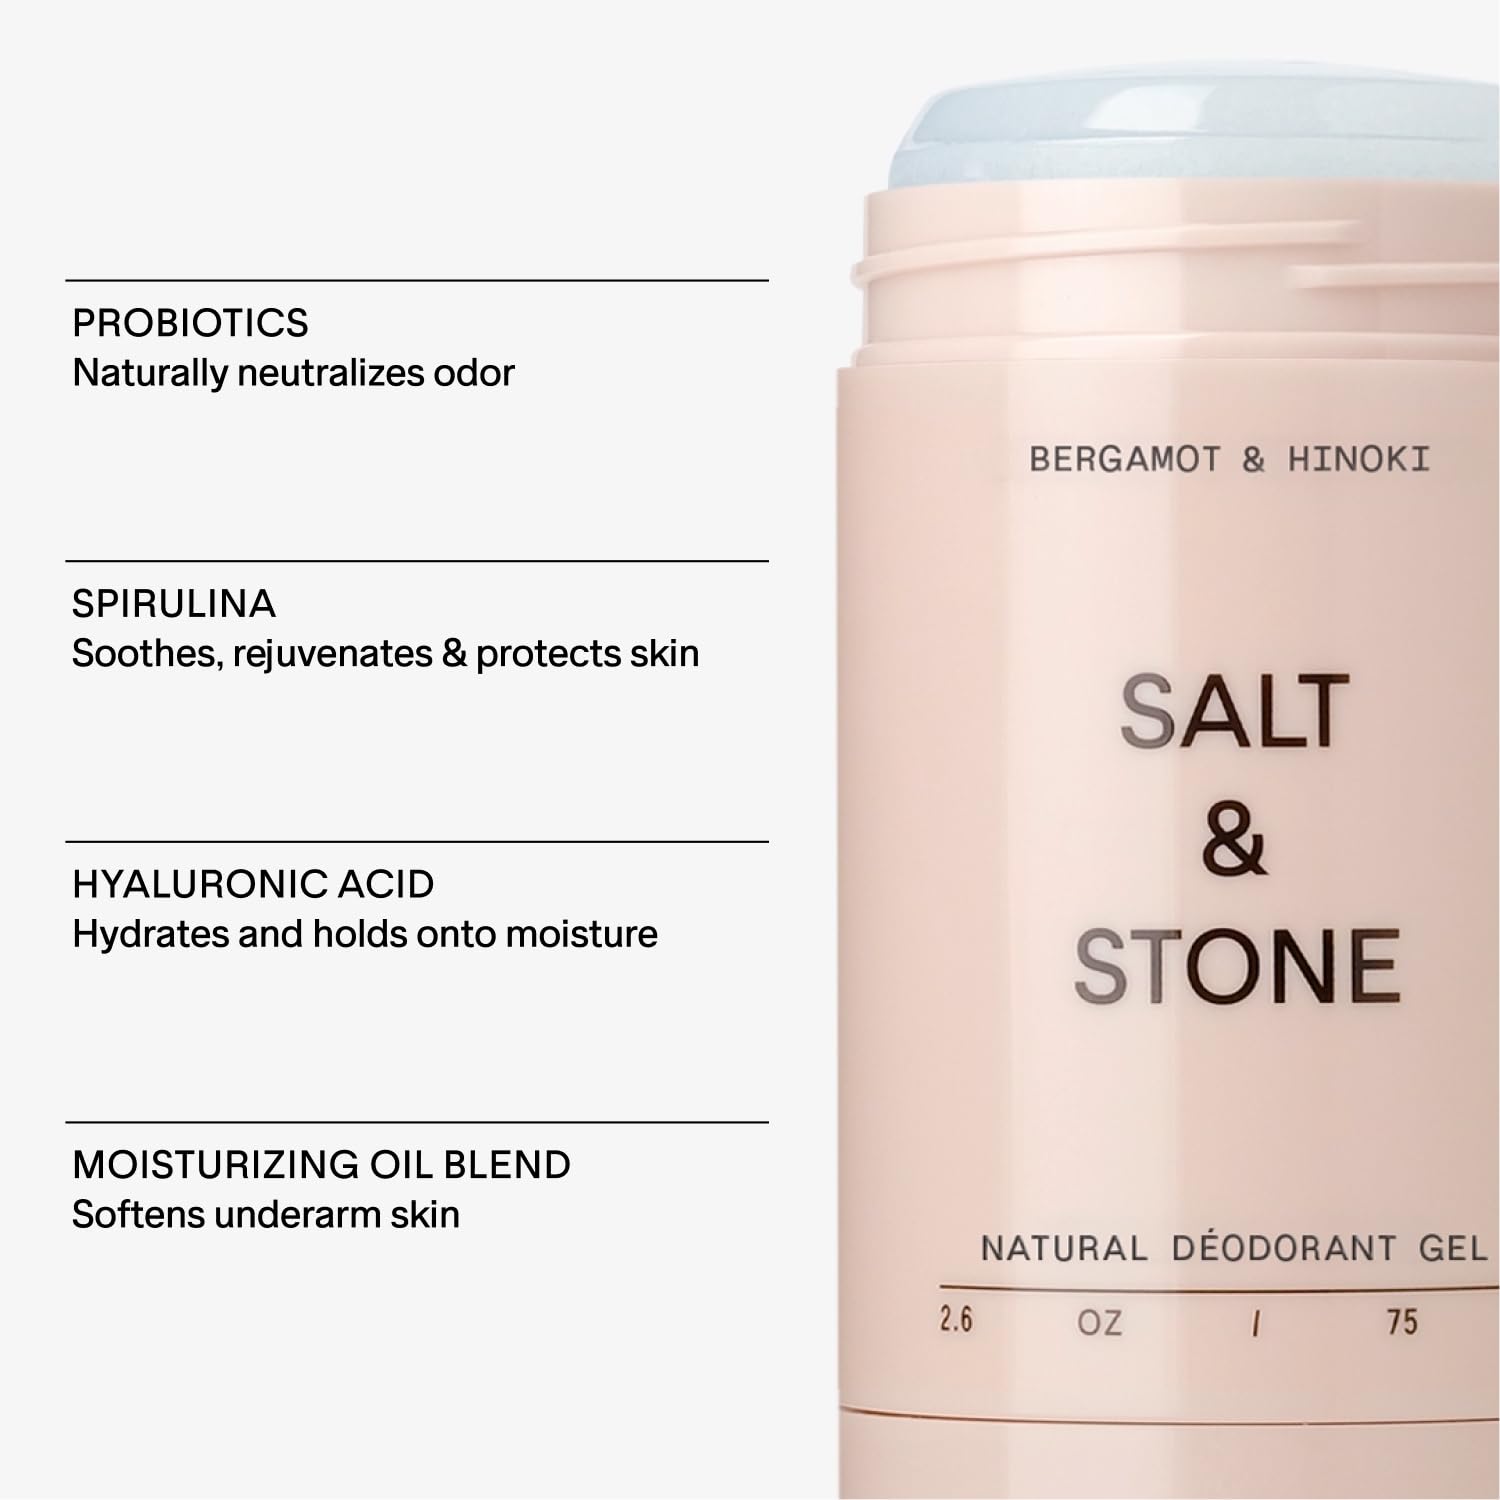 SALT & STONE Sensitive Skin Deodorant - Bergamot & Hinoki | Aluminum-Free Natural Deodorant for Men & Women | Free From Parabens, Sulfates & Phthalates (2.6oz) : Beauty & Personal Care